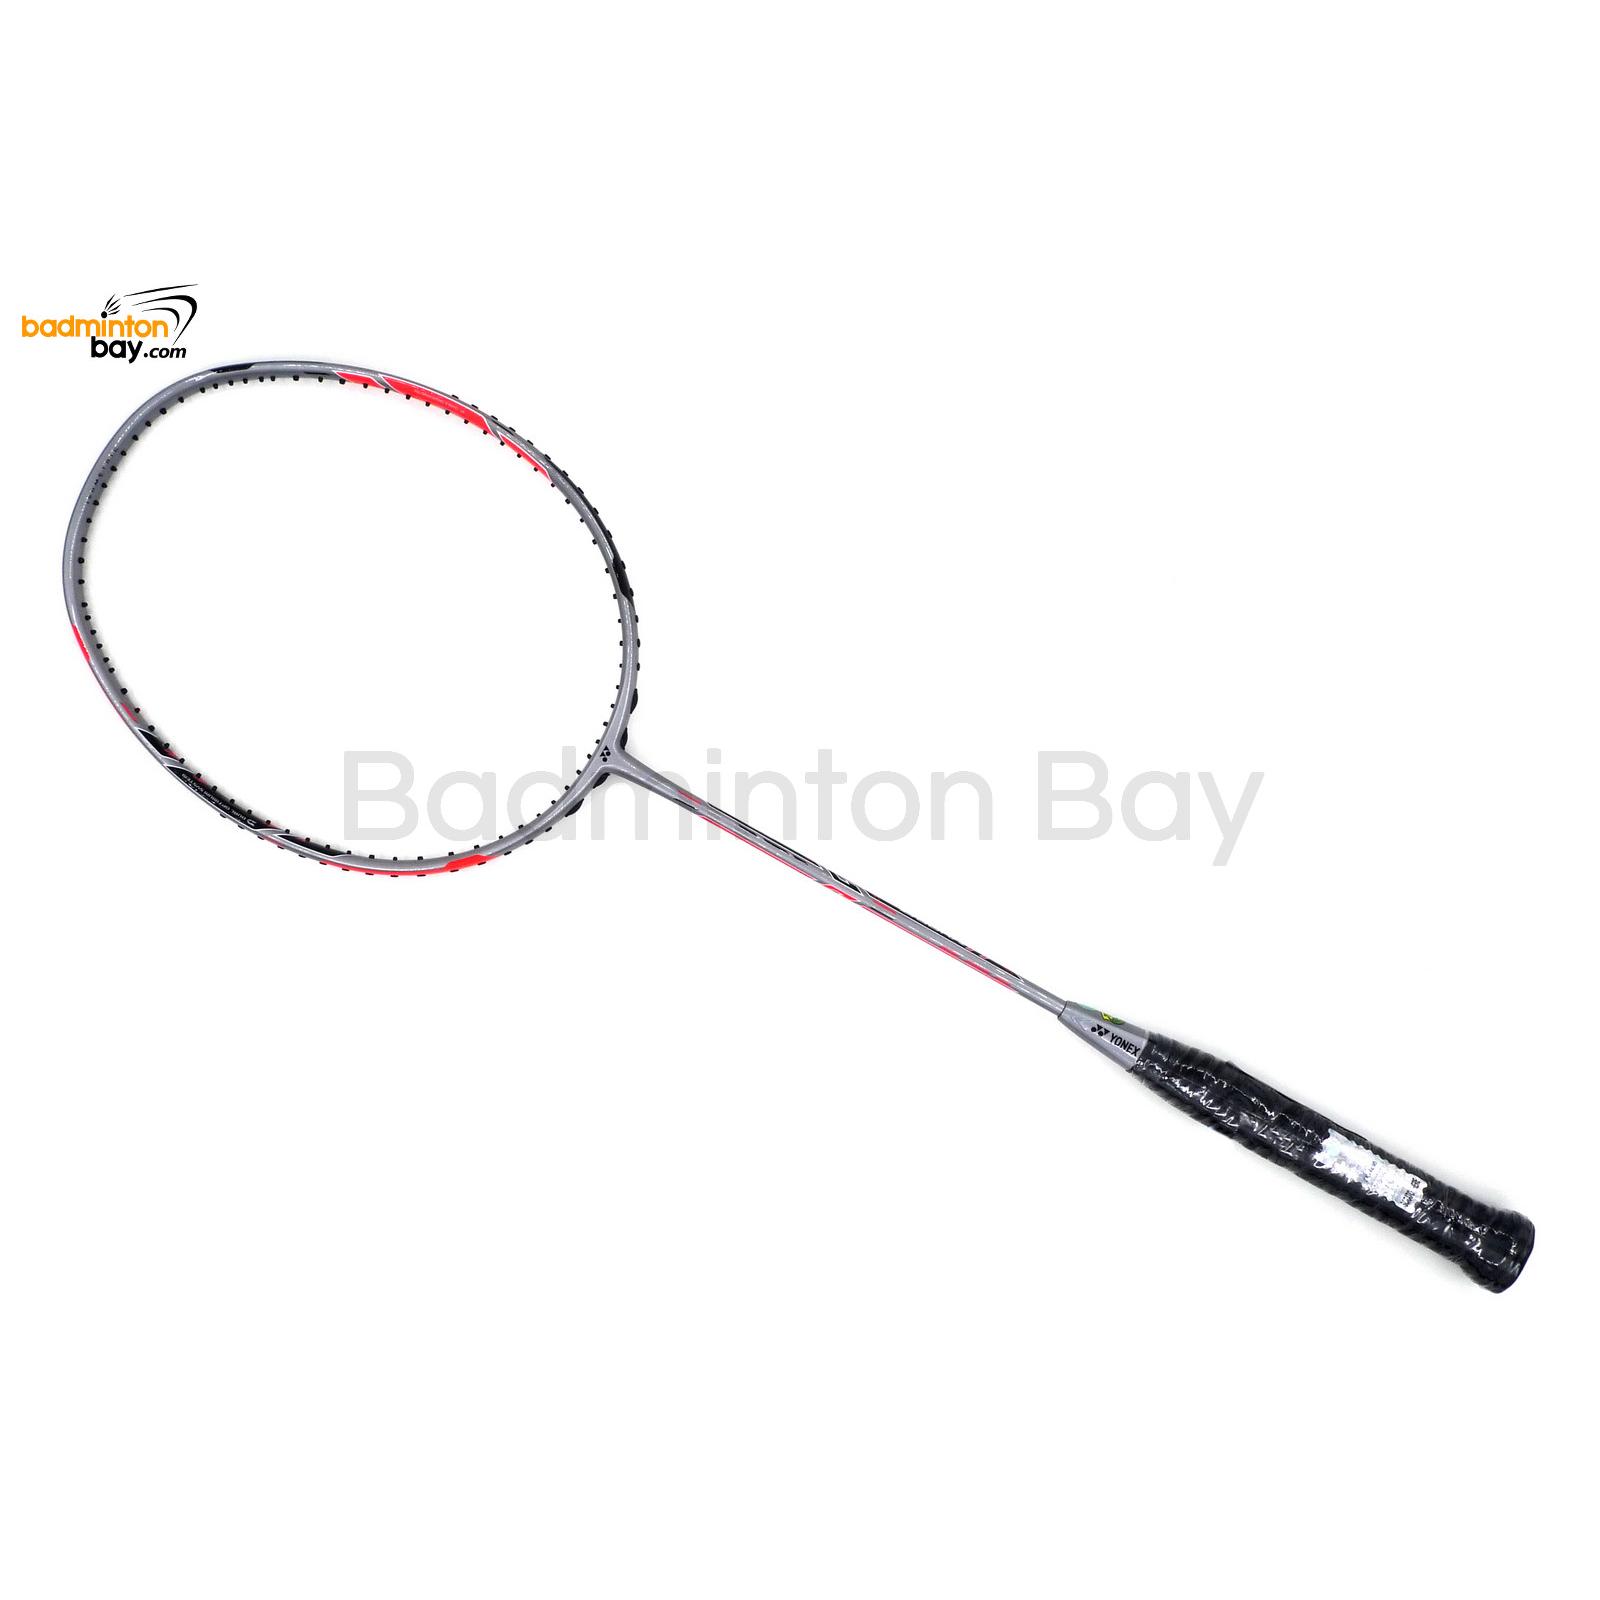 Hot Arrival DUORA 77 Carbon badminton racket DUO 77 orange/Black Racket 